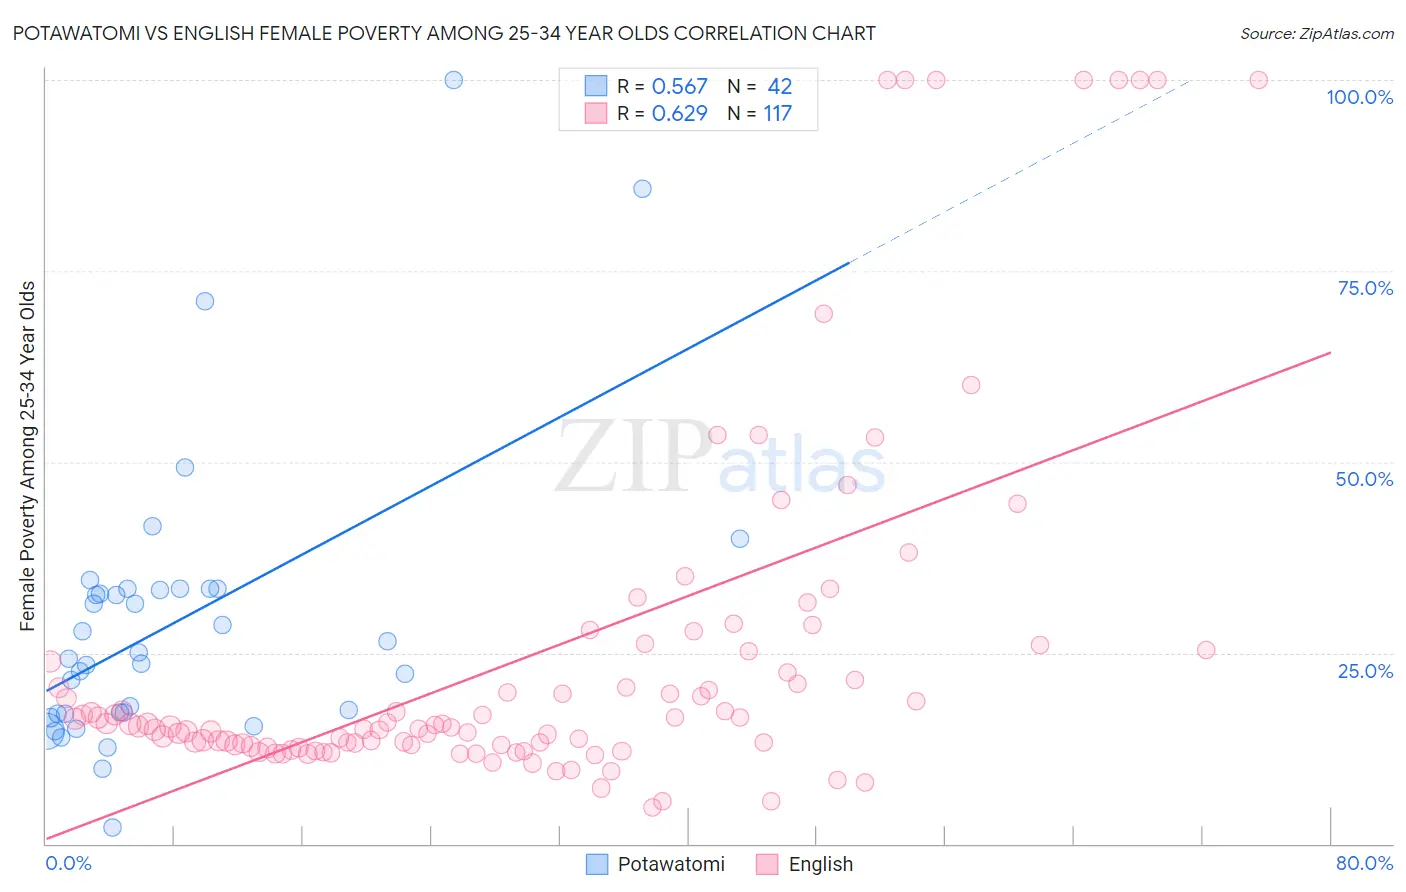 Potawatomi vs English Female Poverty Among 25-34 Year Olds